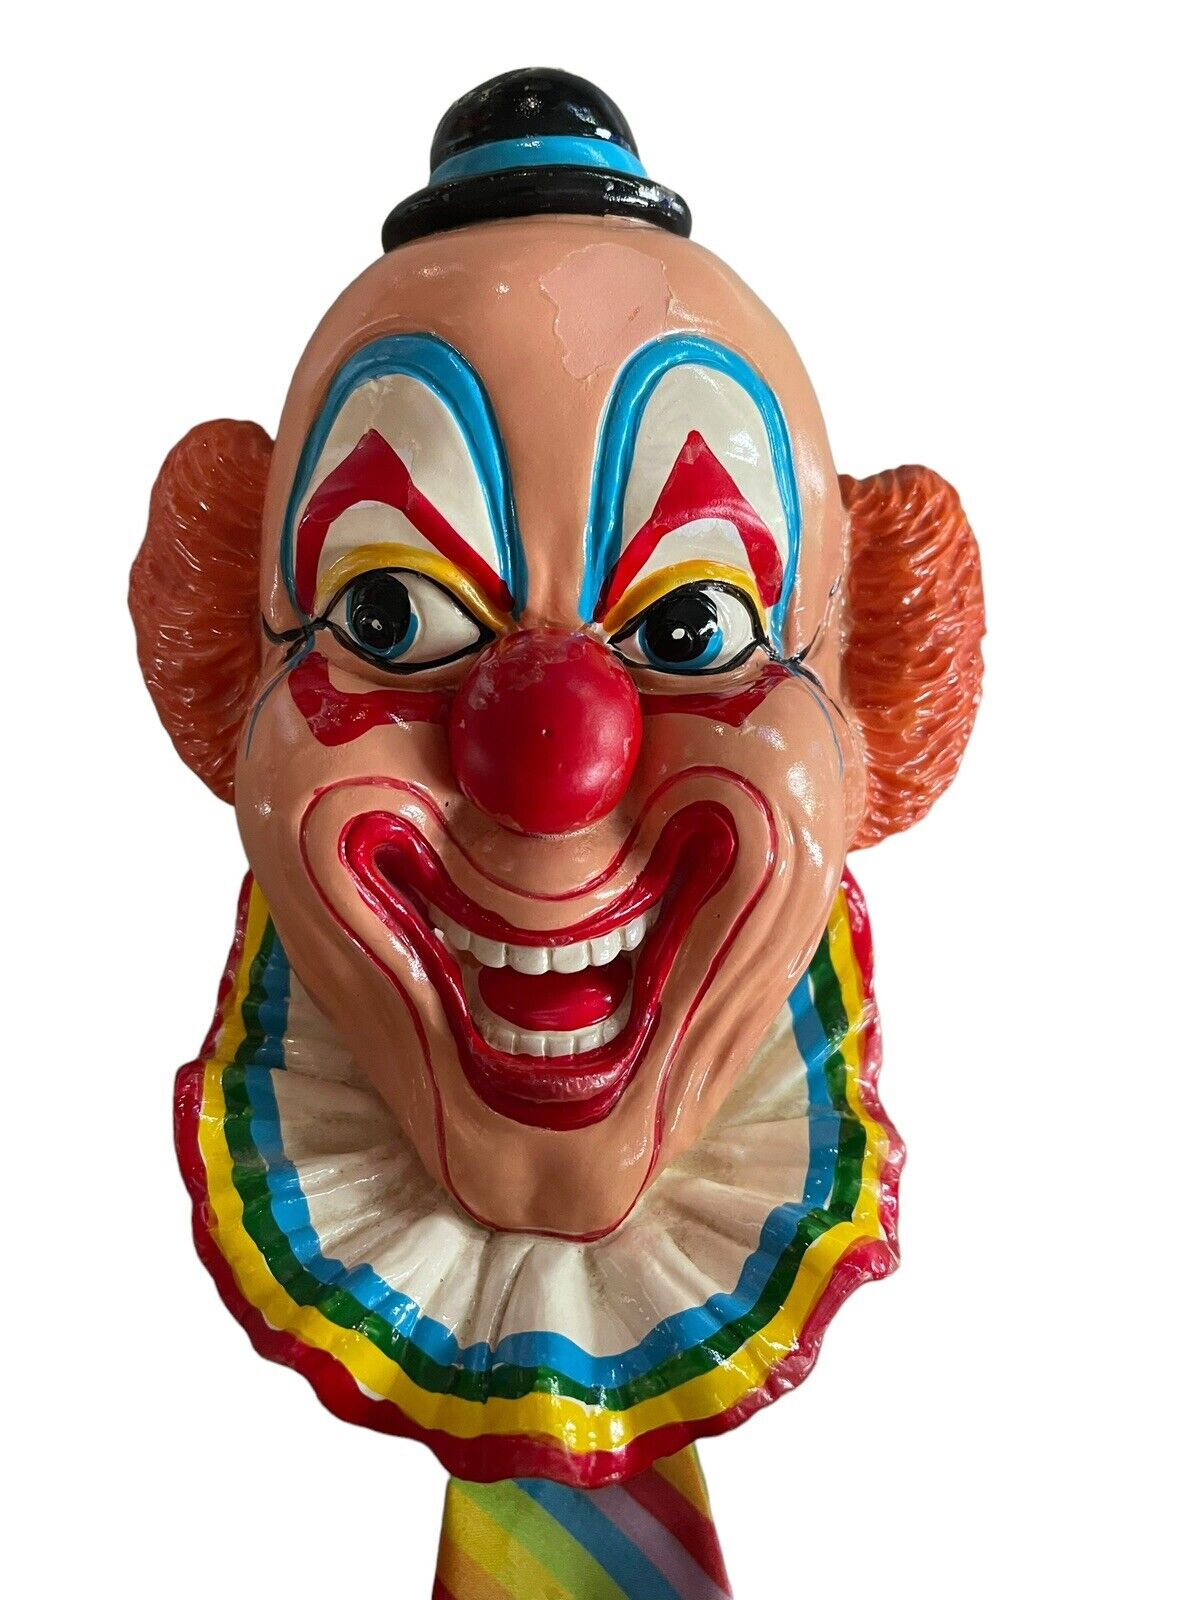 Vintage Circus Clown Wall Hanging Motion Detector Creepy Rainbow Scary Clown